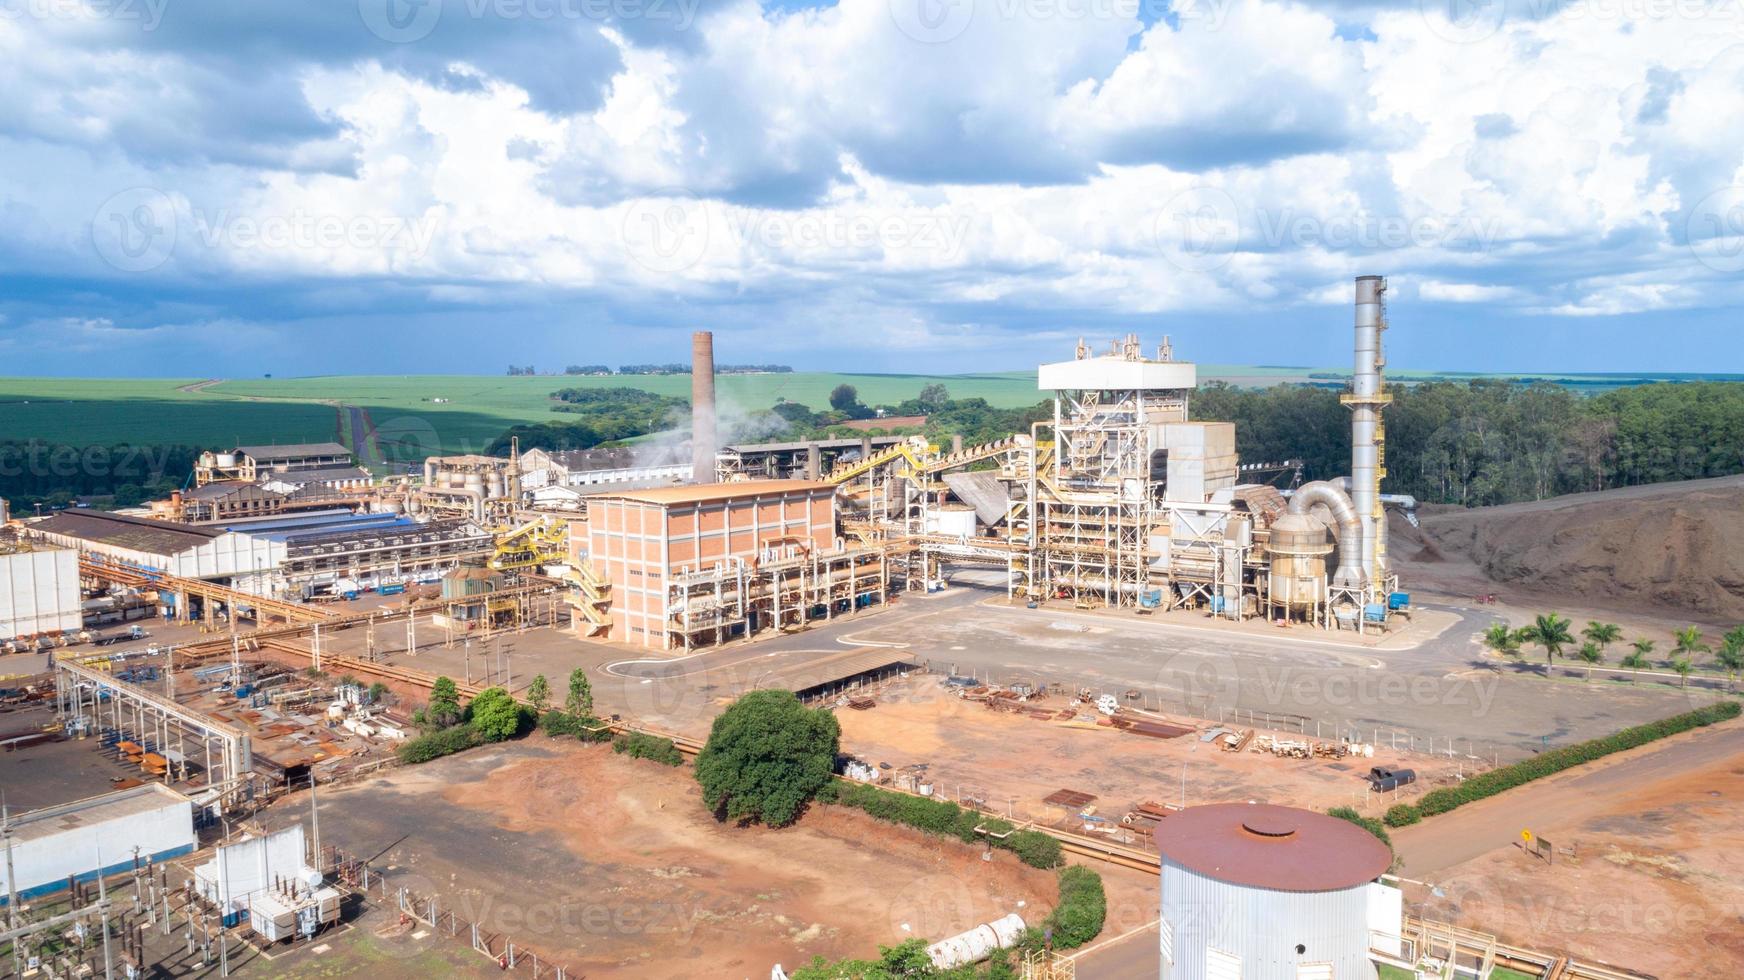 usina industrial de processamento de cana-de-açúcar no brasil. usina de cana-de-açúcar que produz energia renovável. etanol. foto